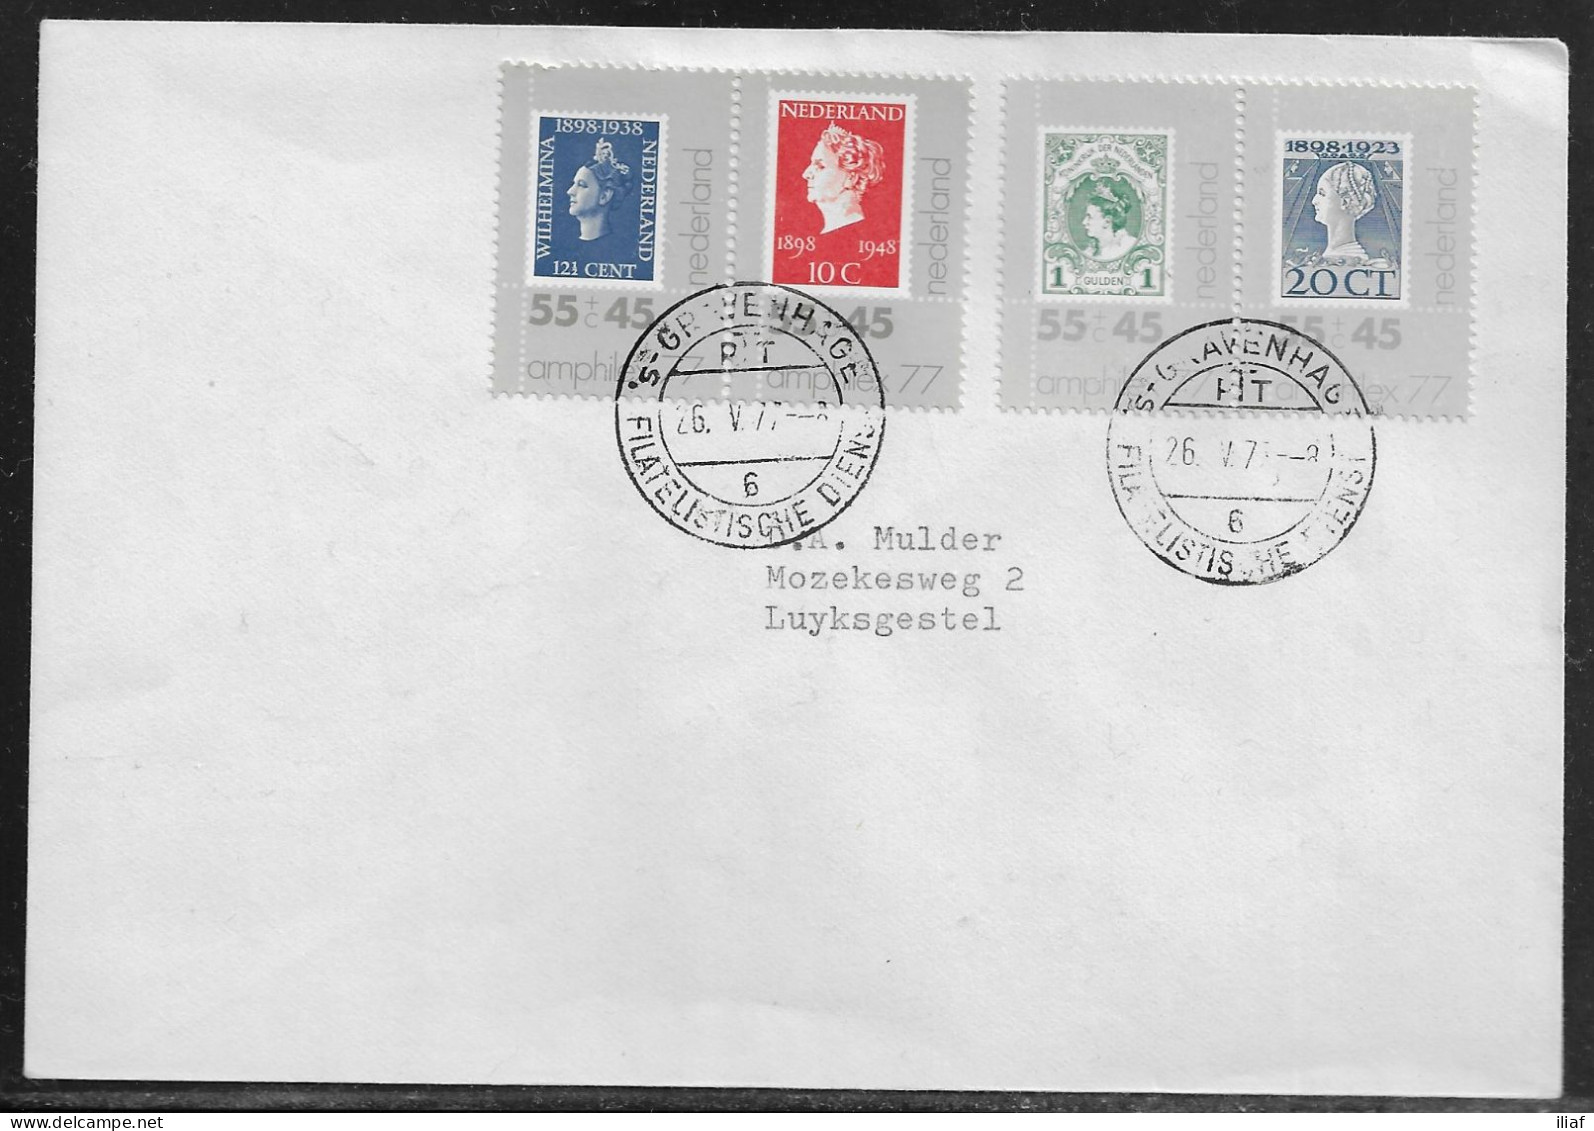 Netherlands. FDC Sc. B535-B538.   International Stamp Exhibition Amphilex '77. Amsterdam, May 26-June 5, 1977 - Briefe U. Dokumente